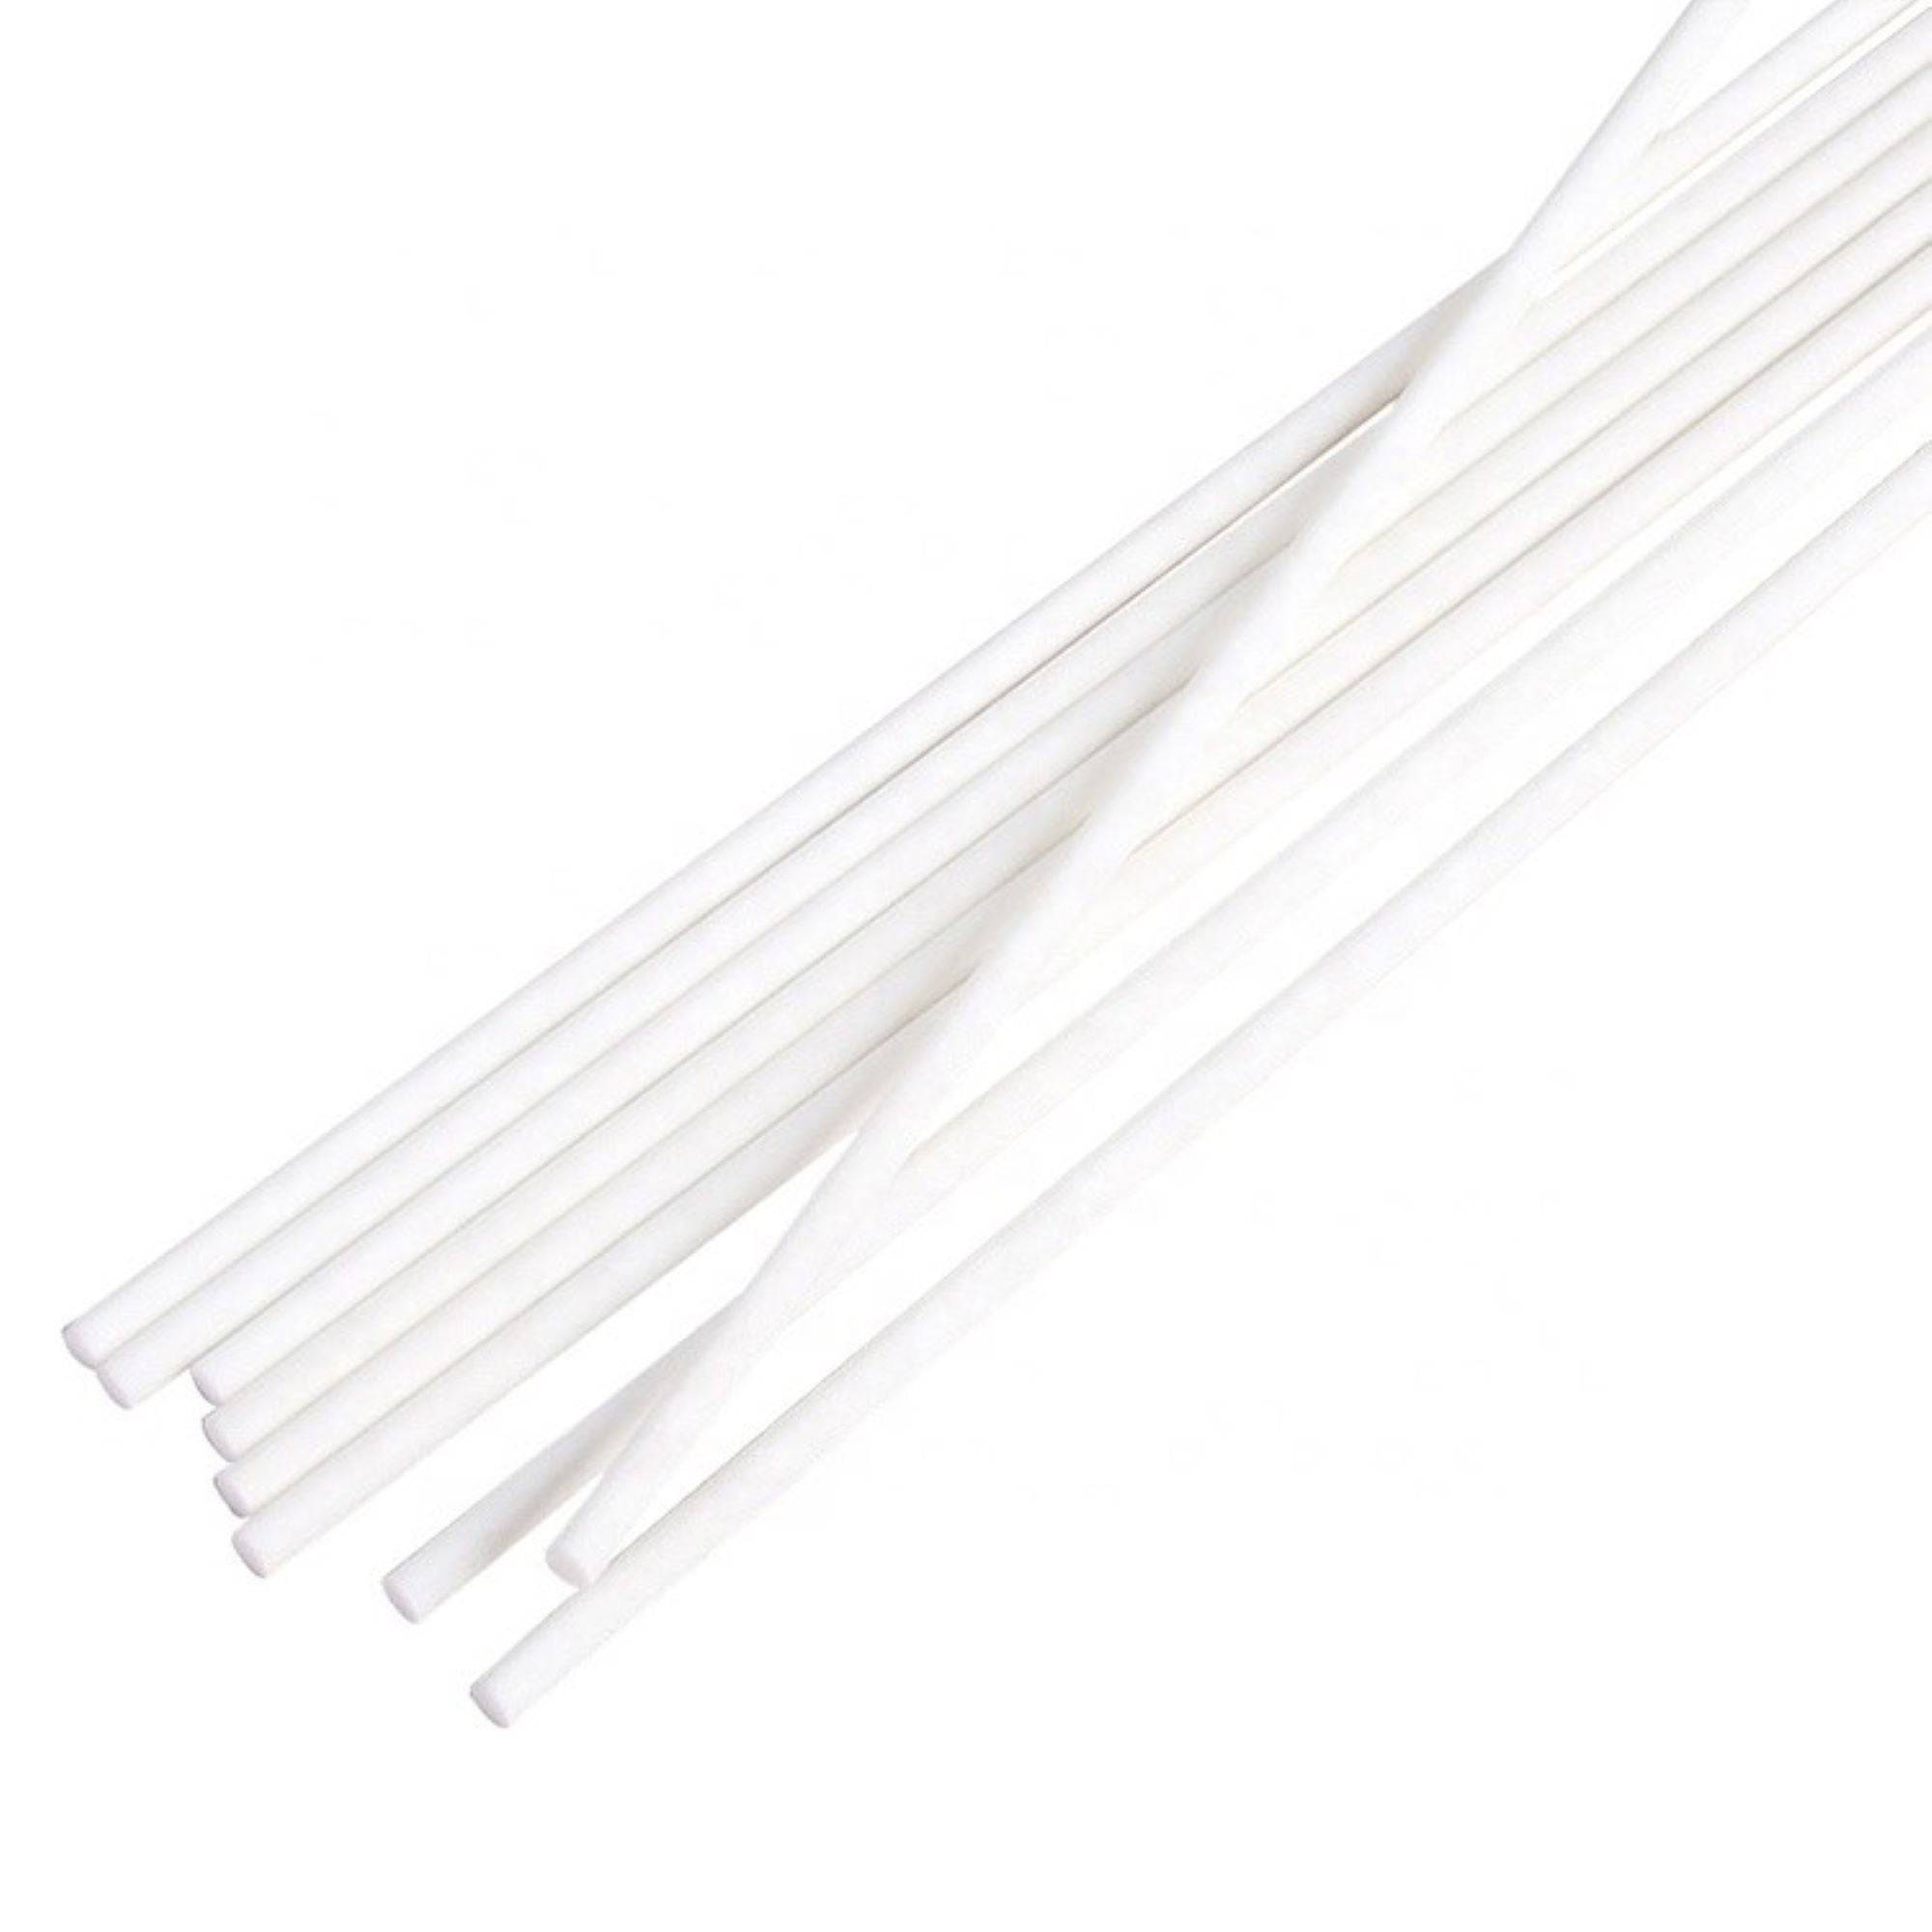 White Fiber Diffuser Reeds, Unscented Replacement Sticks - Durazza